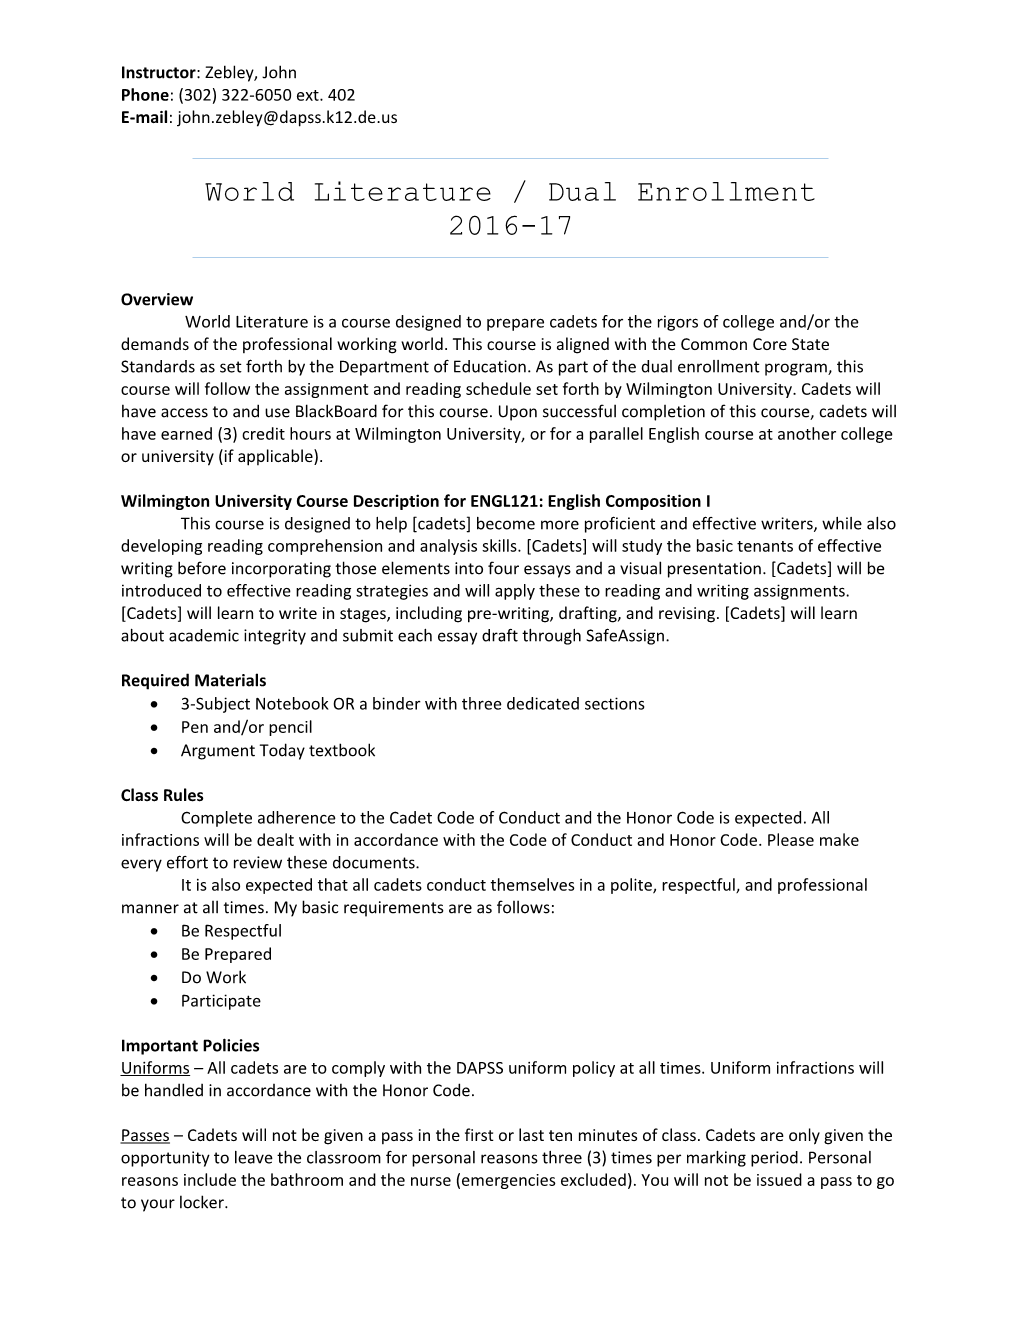 World Literature / Dual Enrollment 2016-17